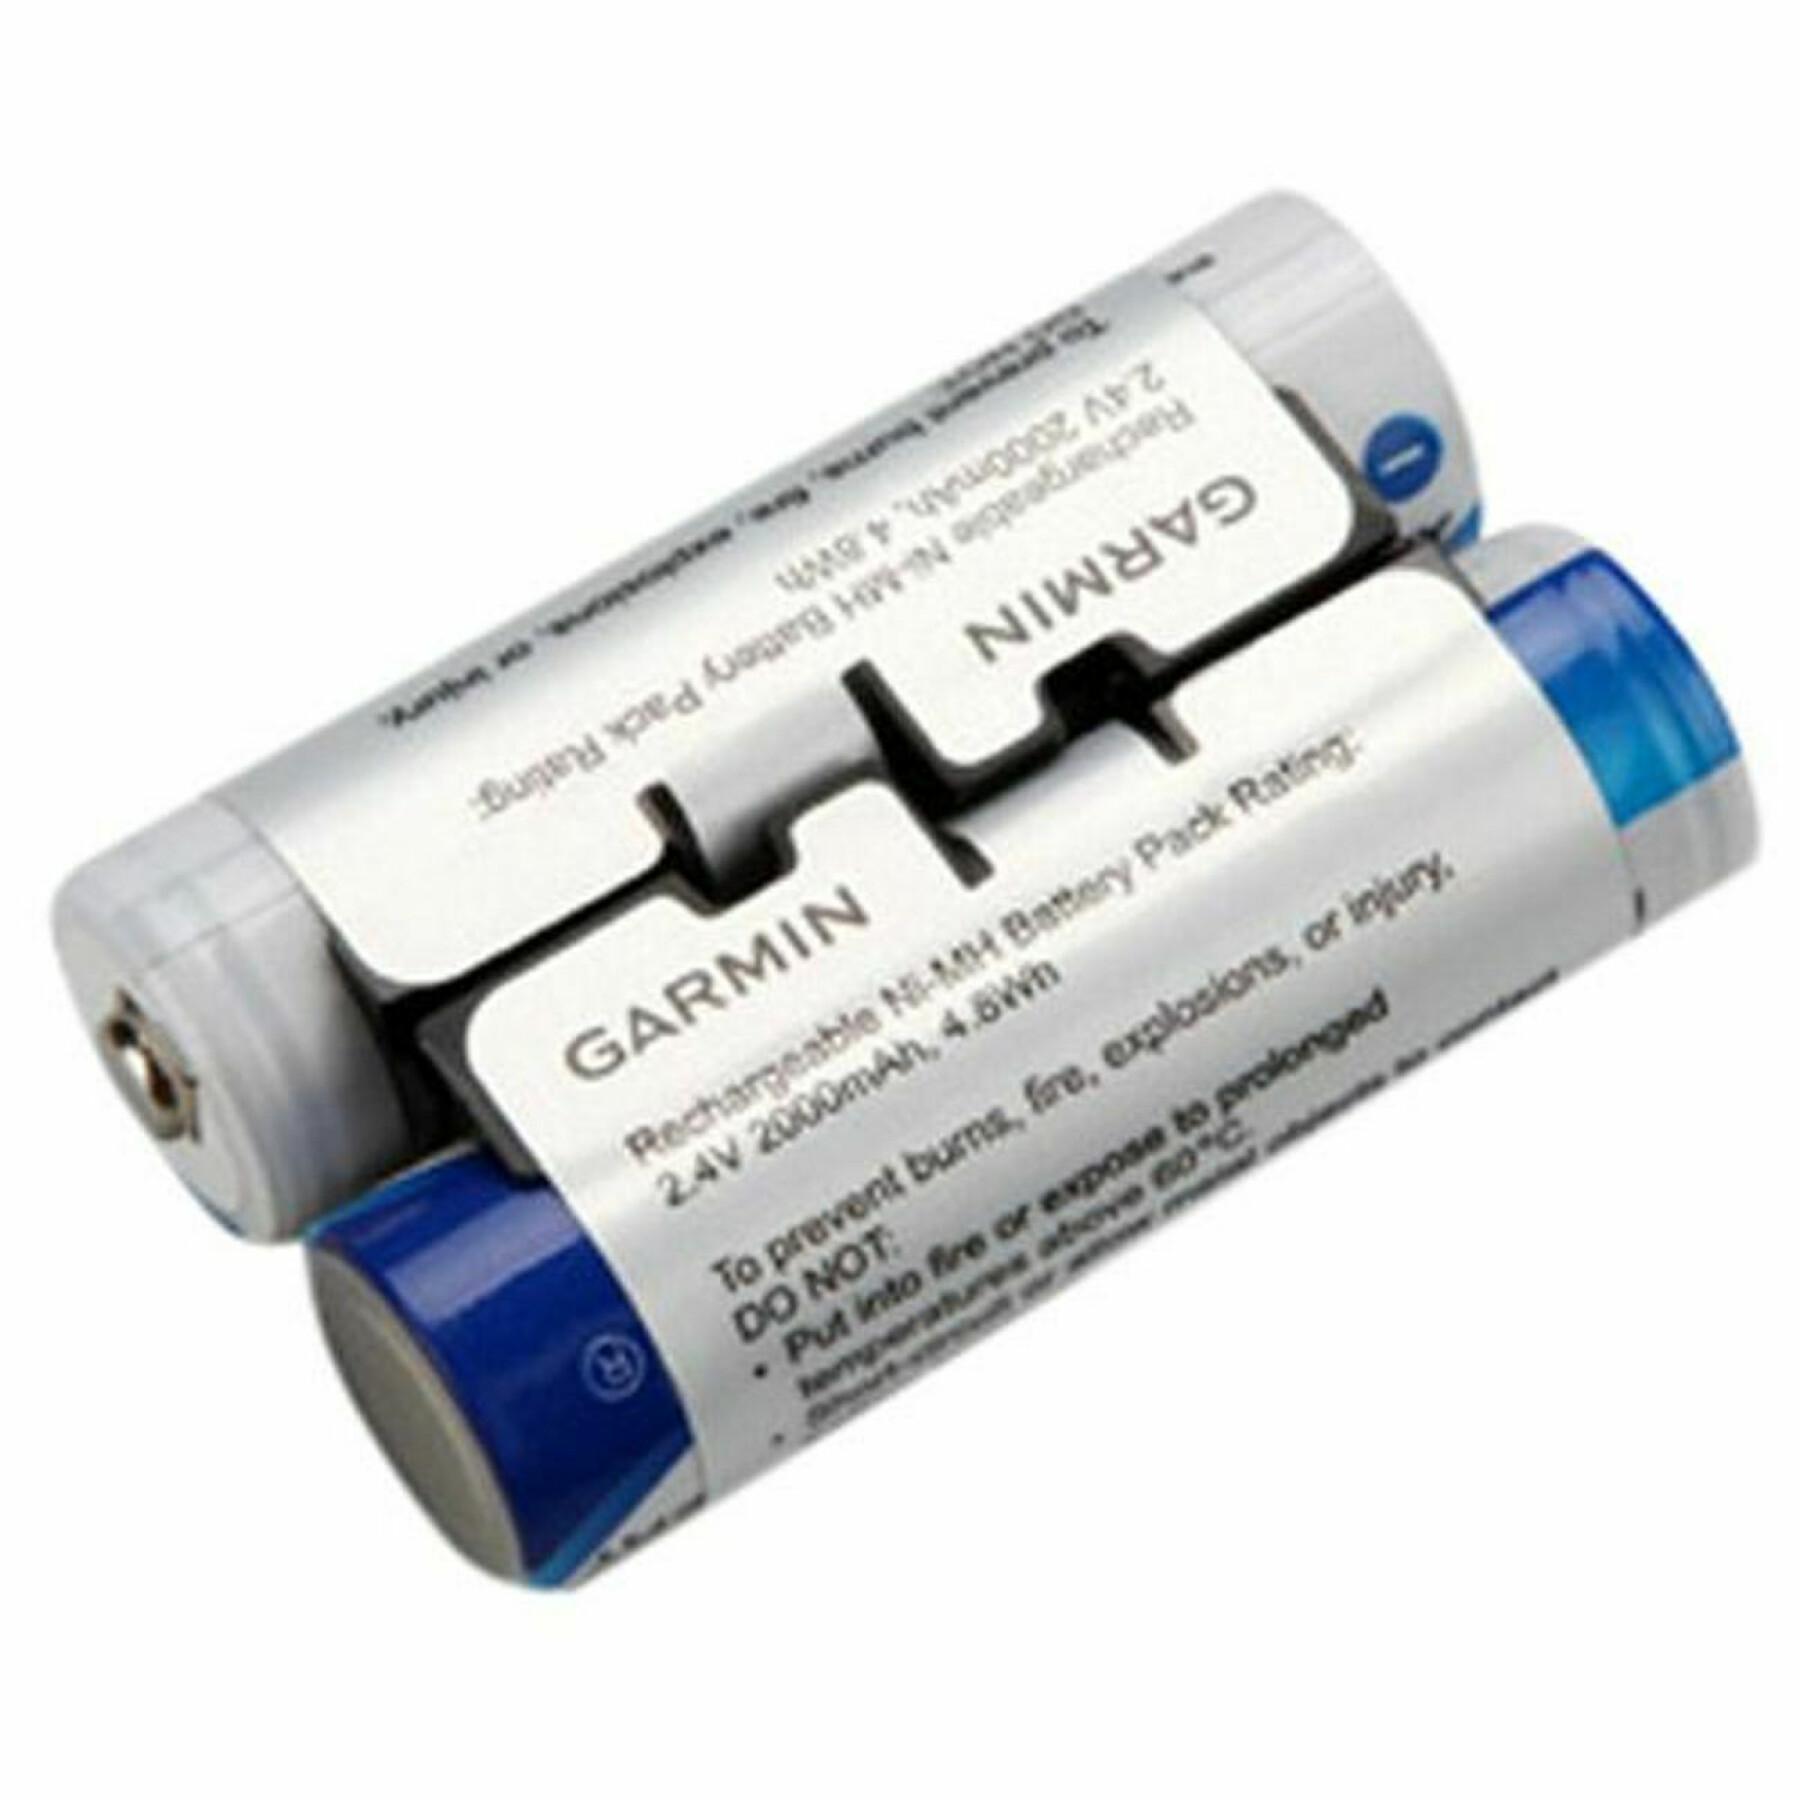 Battery Garmin rechargeable nimh